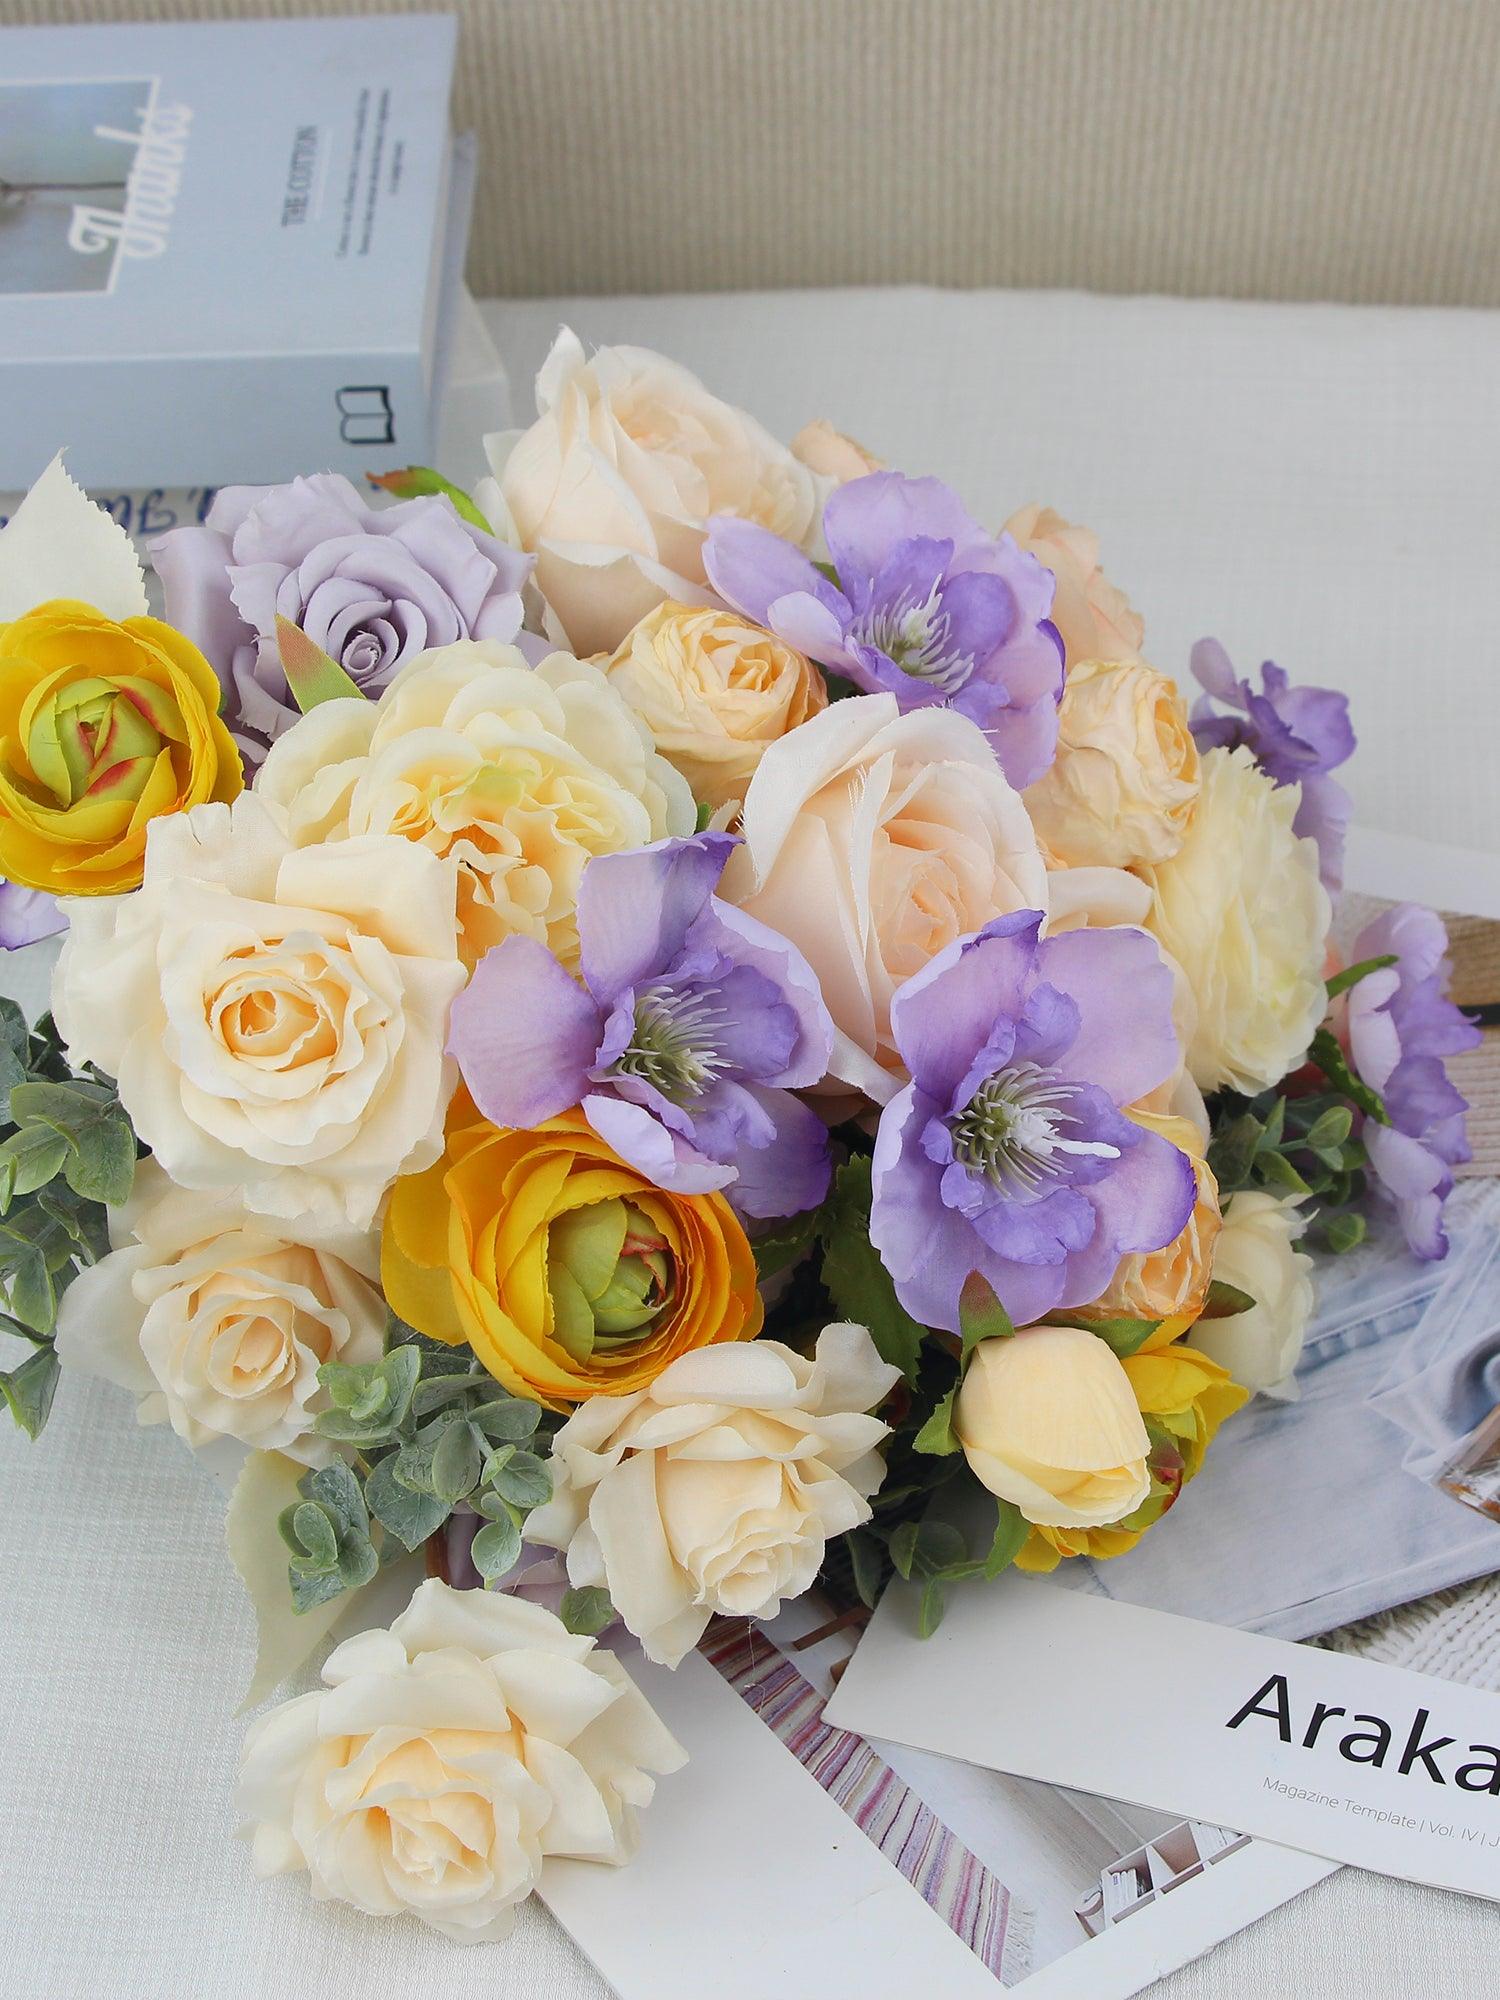 13.3 inch wide Peach & Lilac Bridal Bouquet - Rinlong Flower